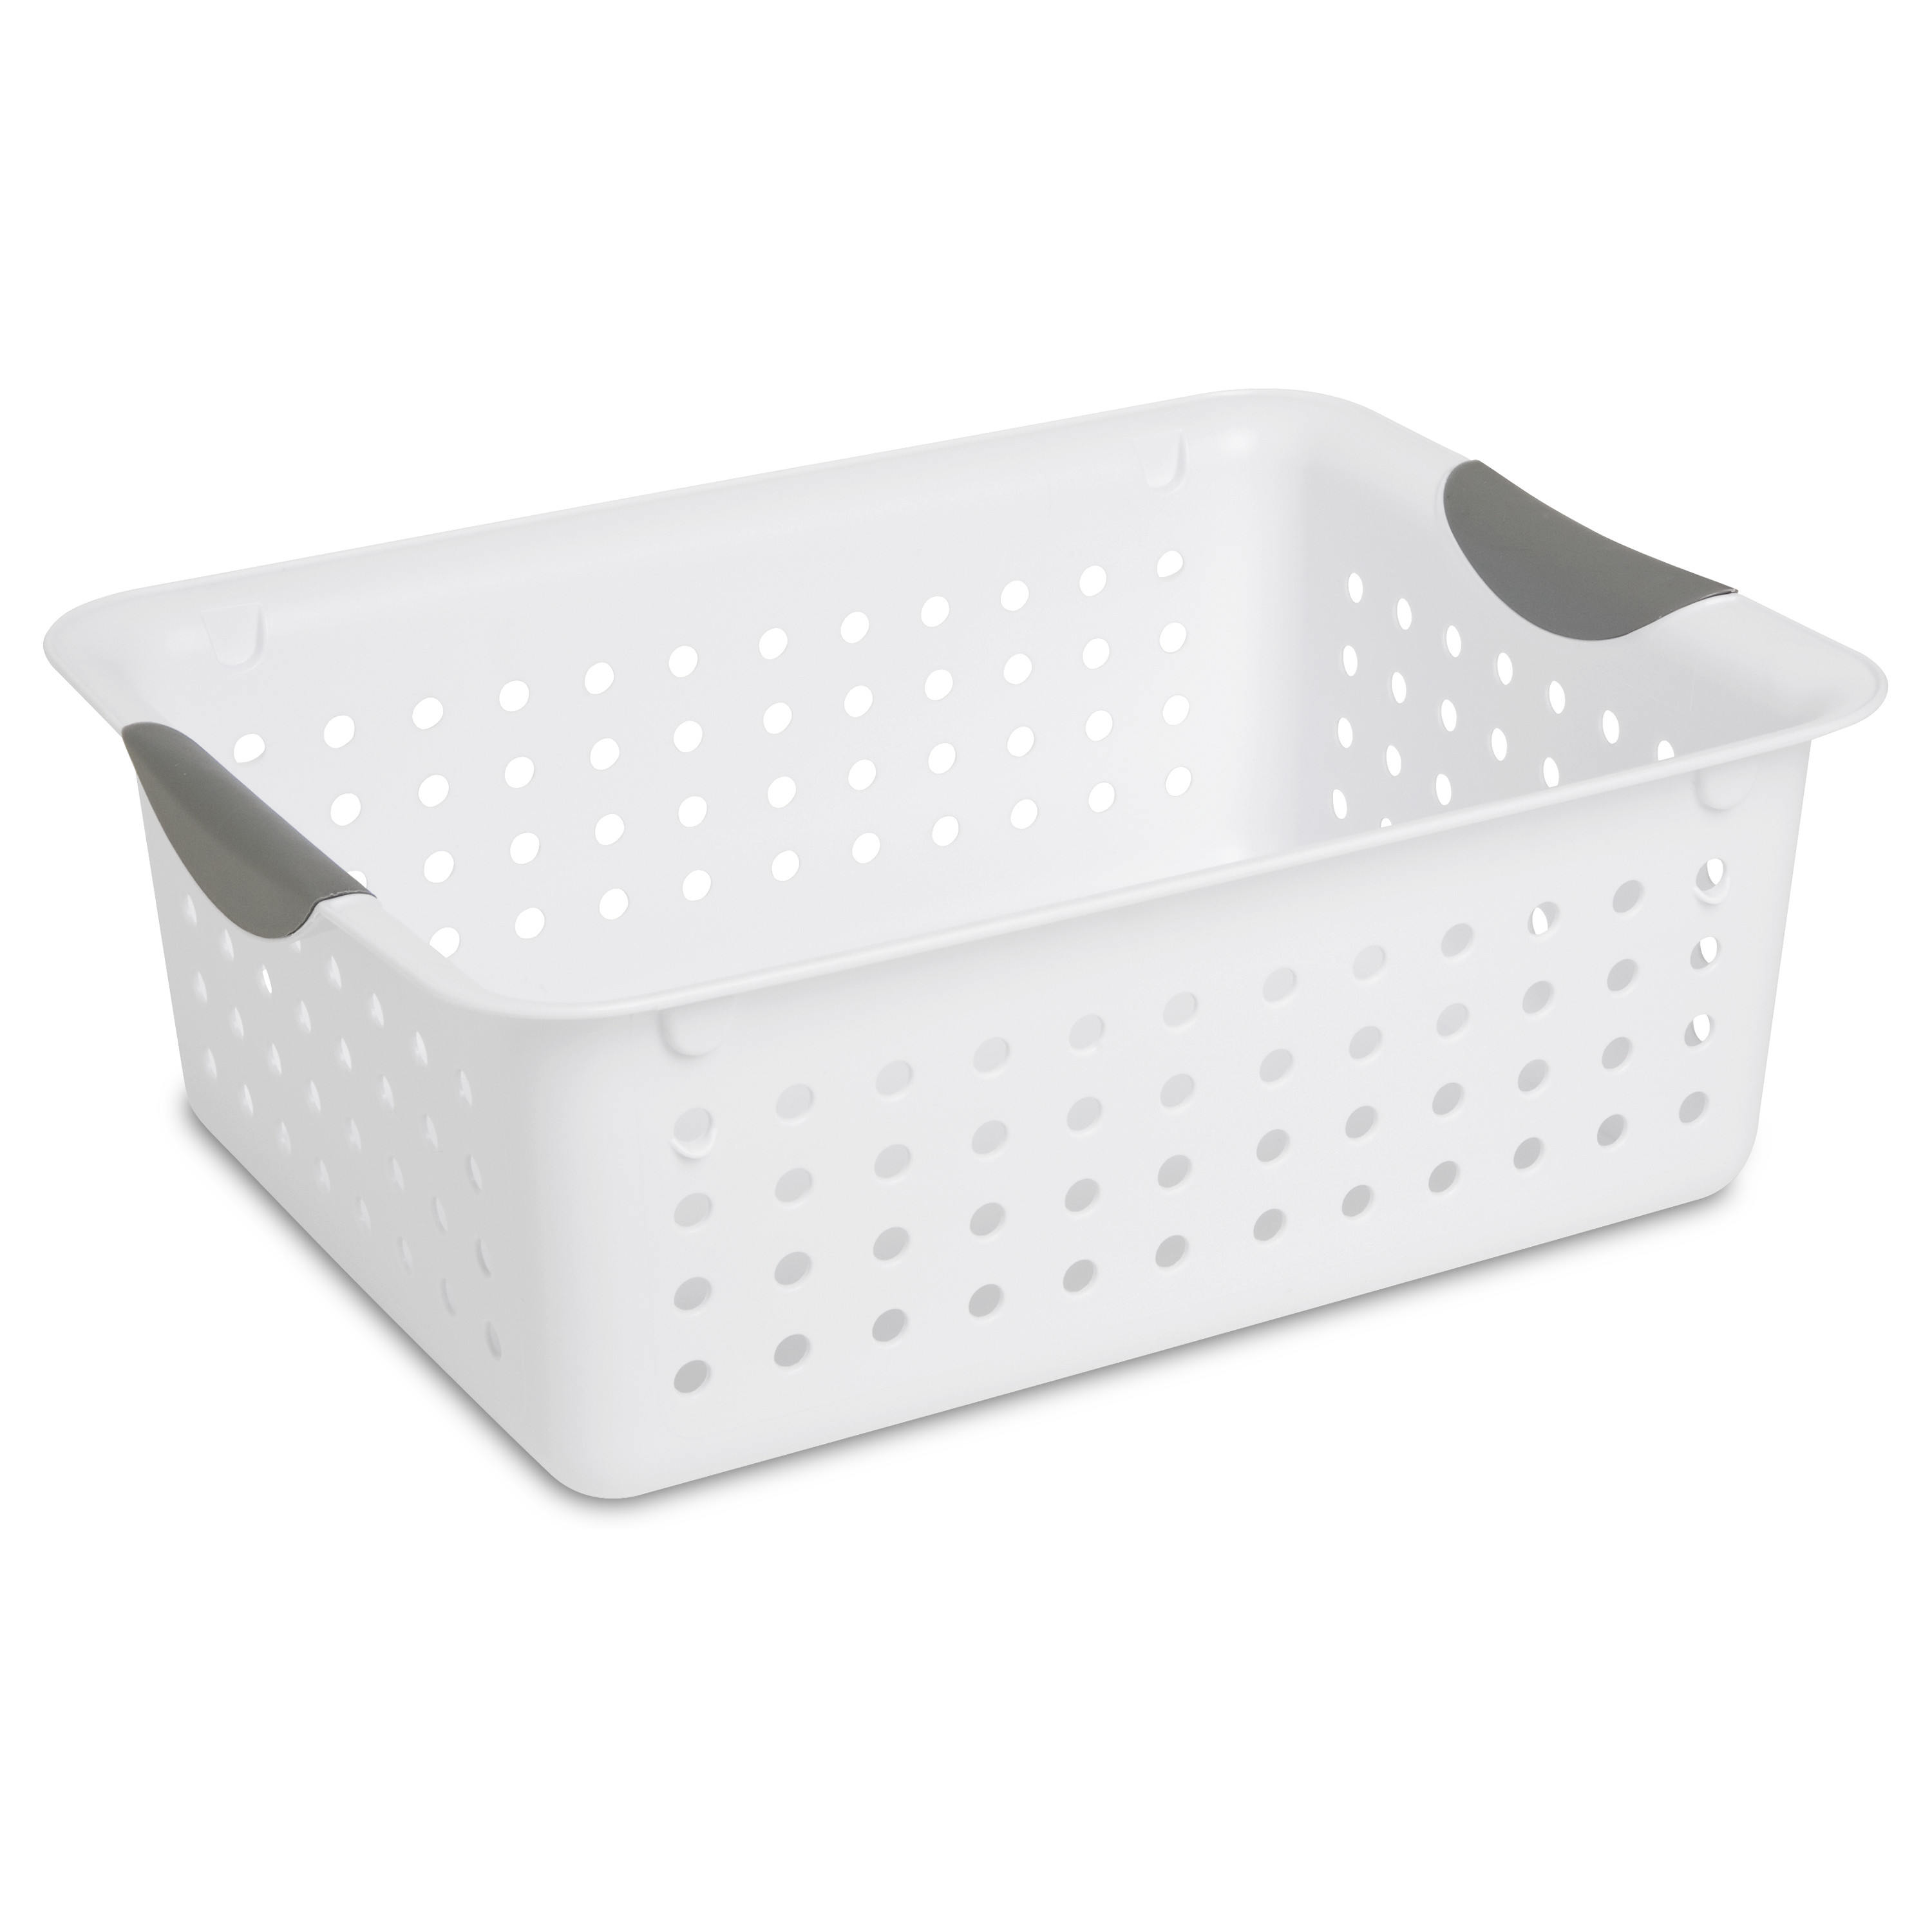 Sterilite Medium Ultra™ Basket Plastic, White - image 1 of 7